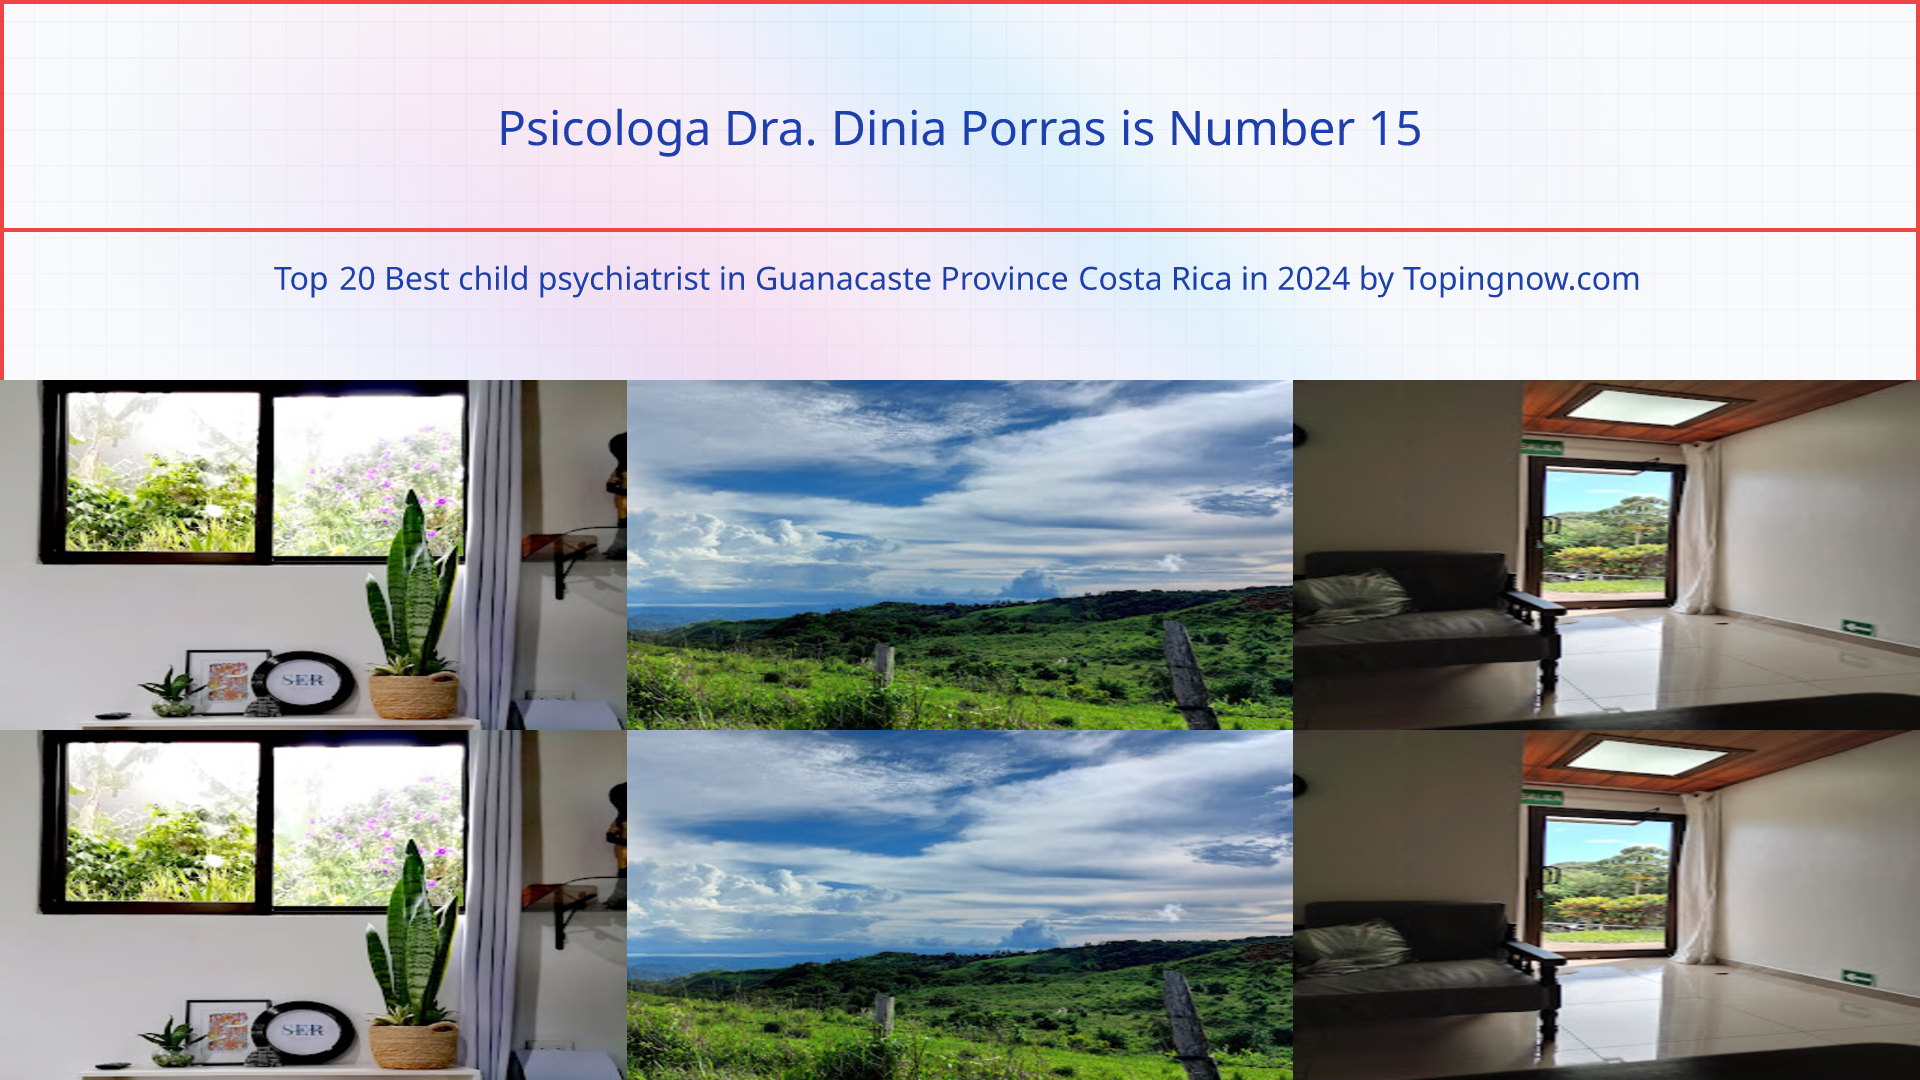 Psicologa Dra. Dinia Porras: Top 20 Best child psychiatrist in Guanacaste Province Costa Rica in 2024